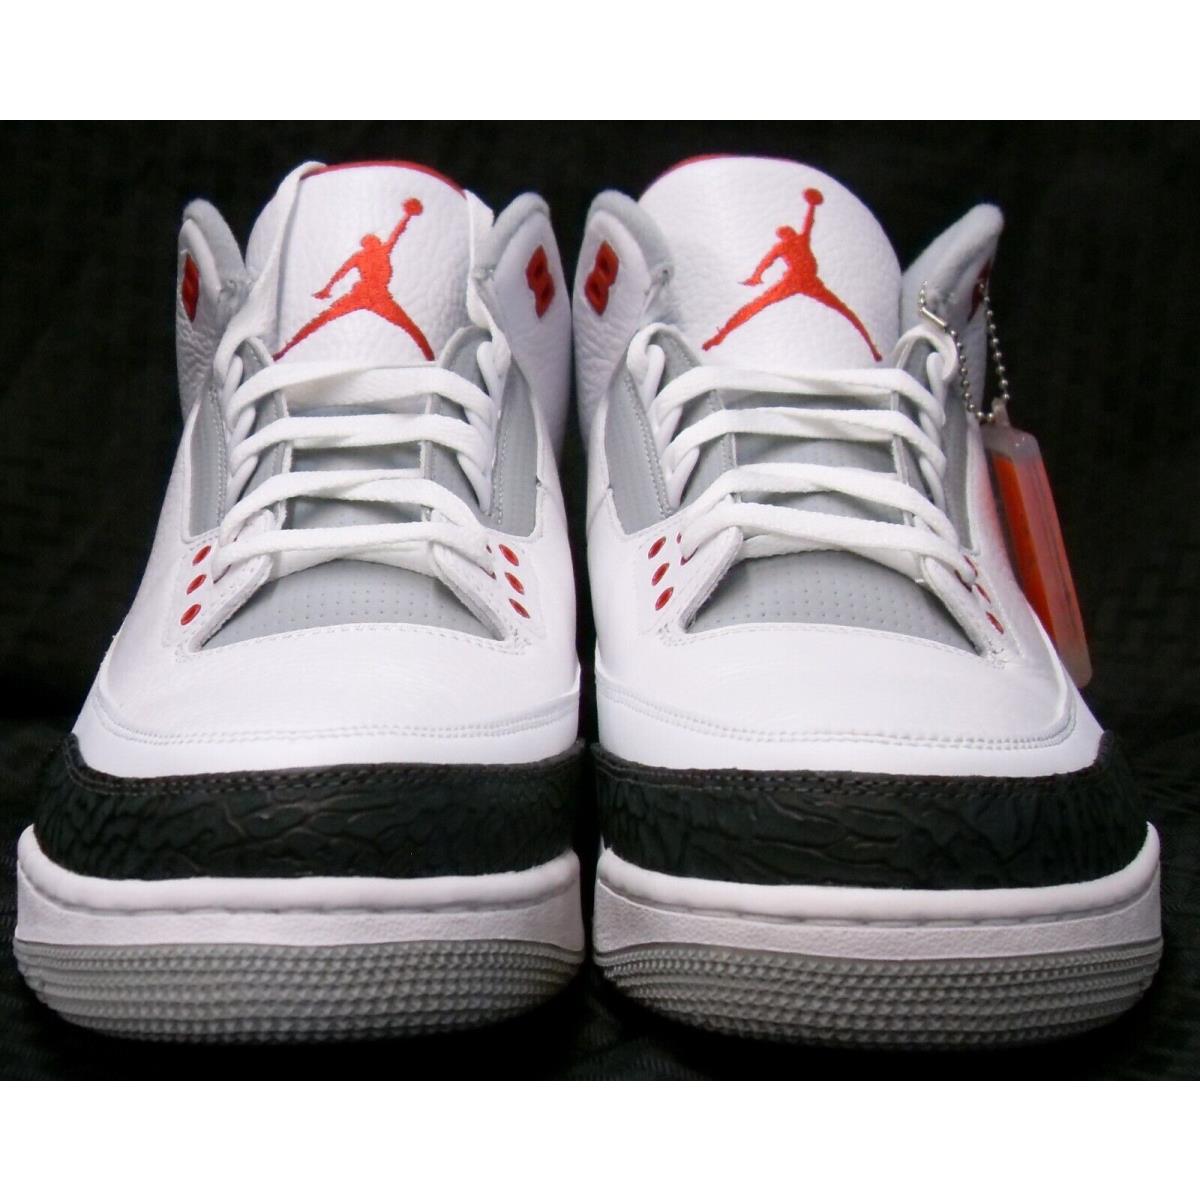 Nike shoes Air - Red White Black 0